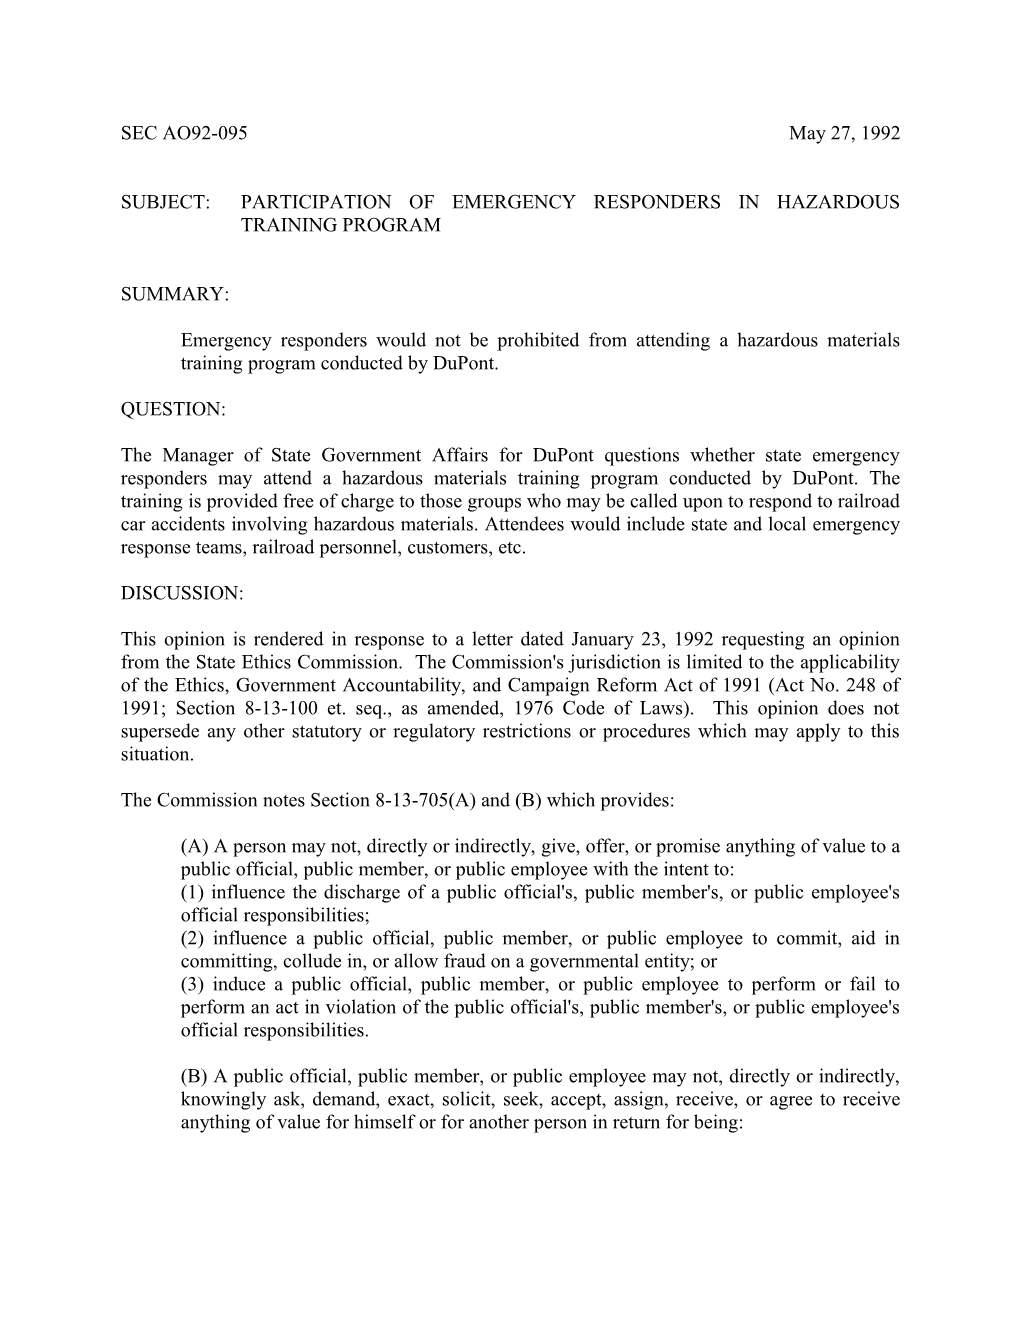 Subject:Participation of Emergency Responders in Hazardous Training Program